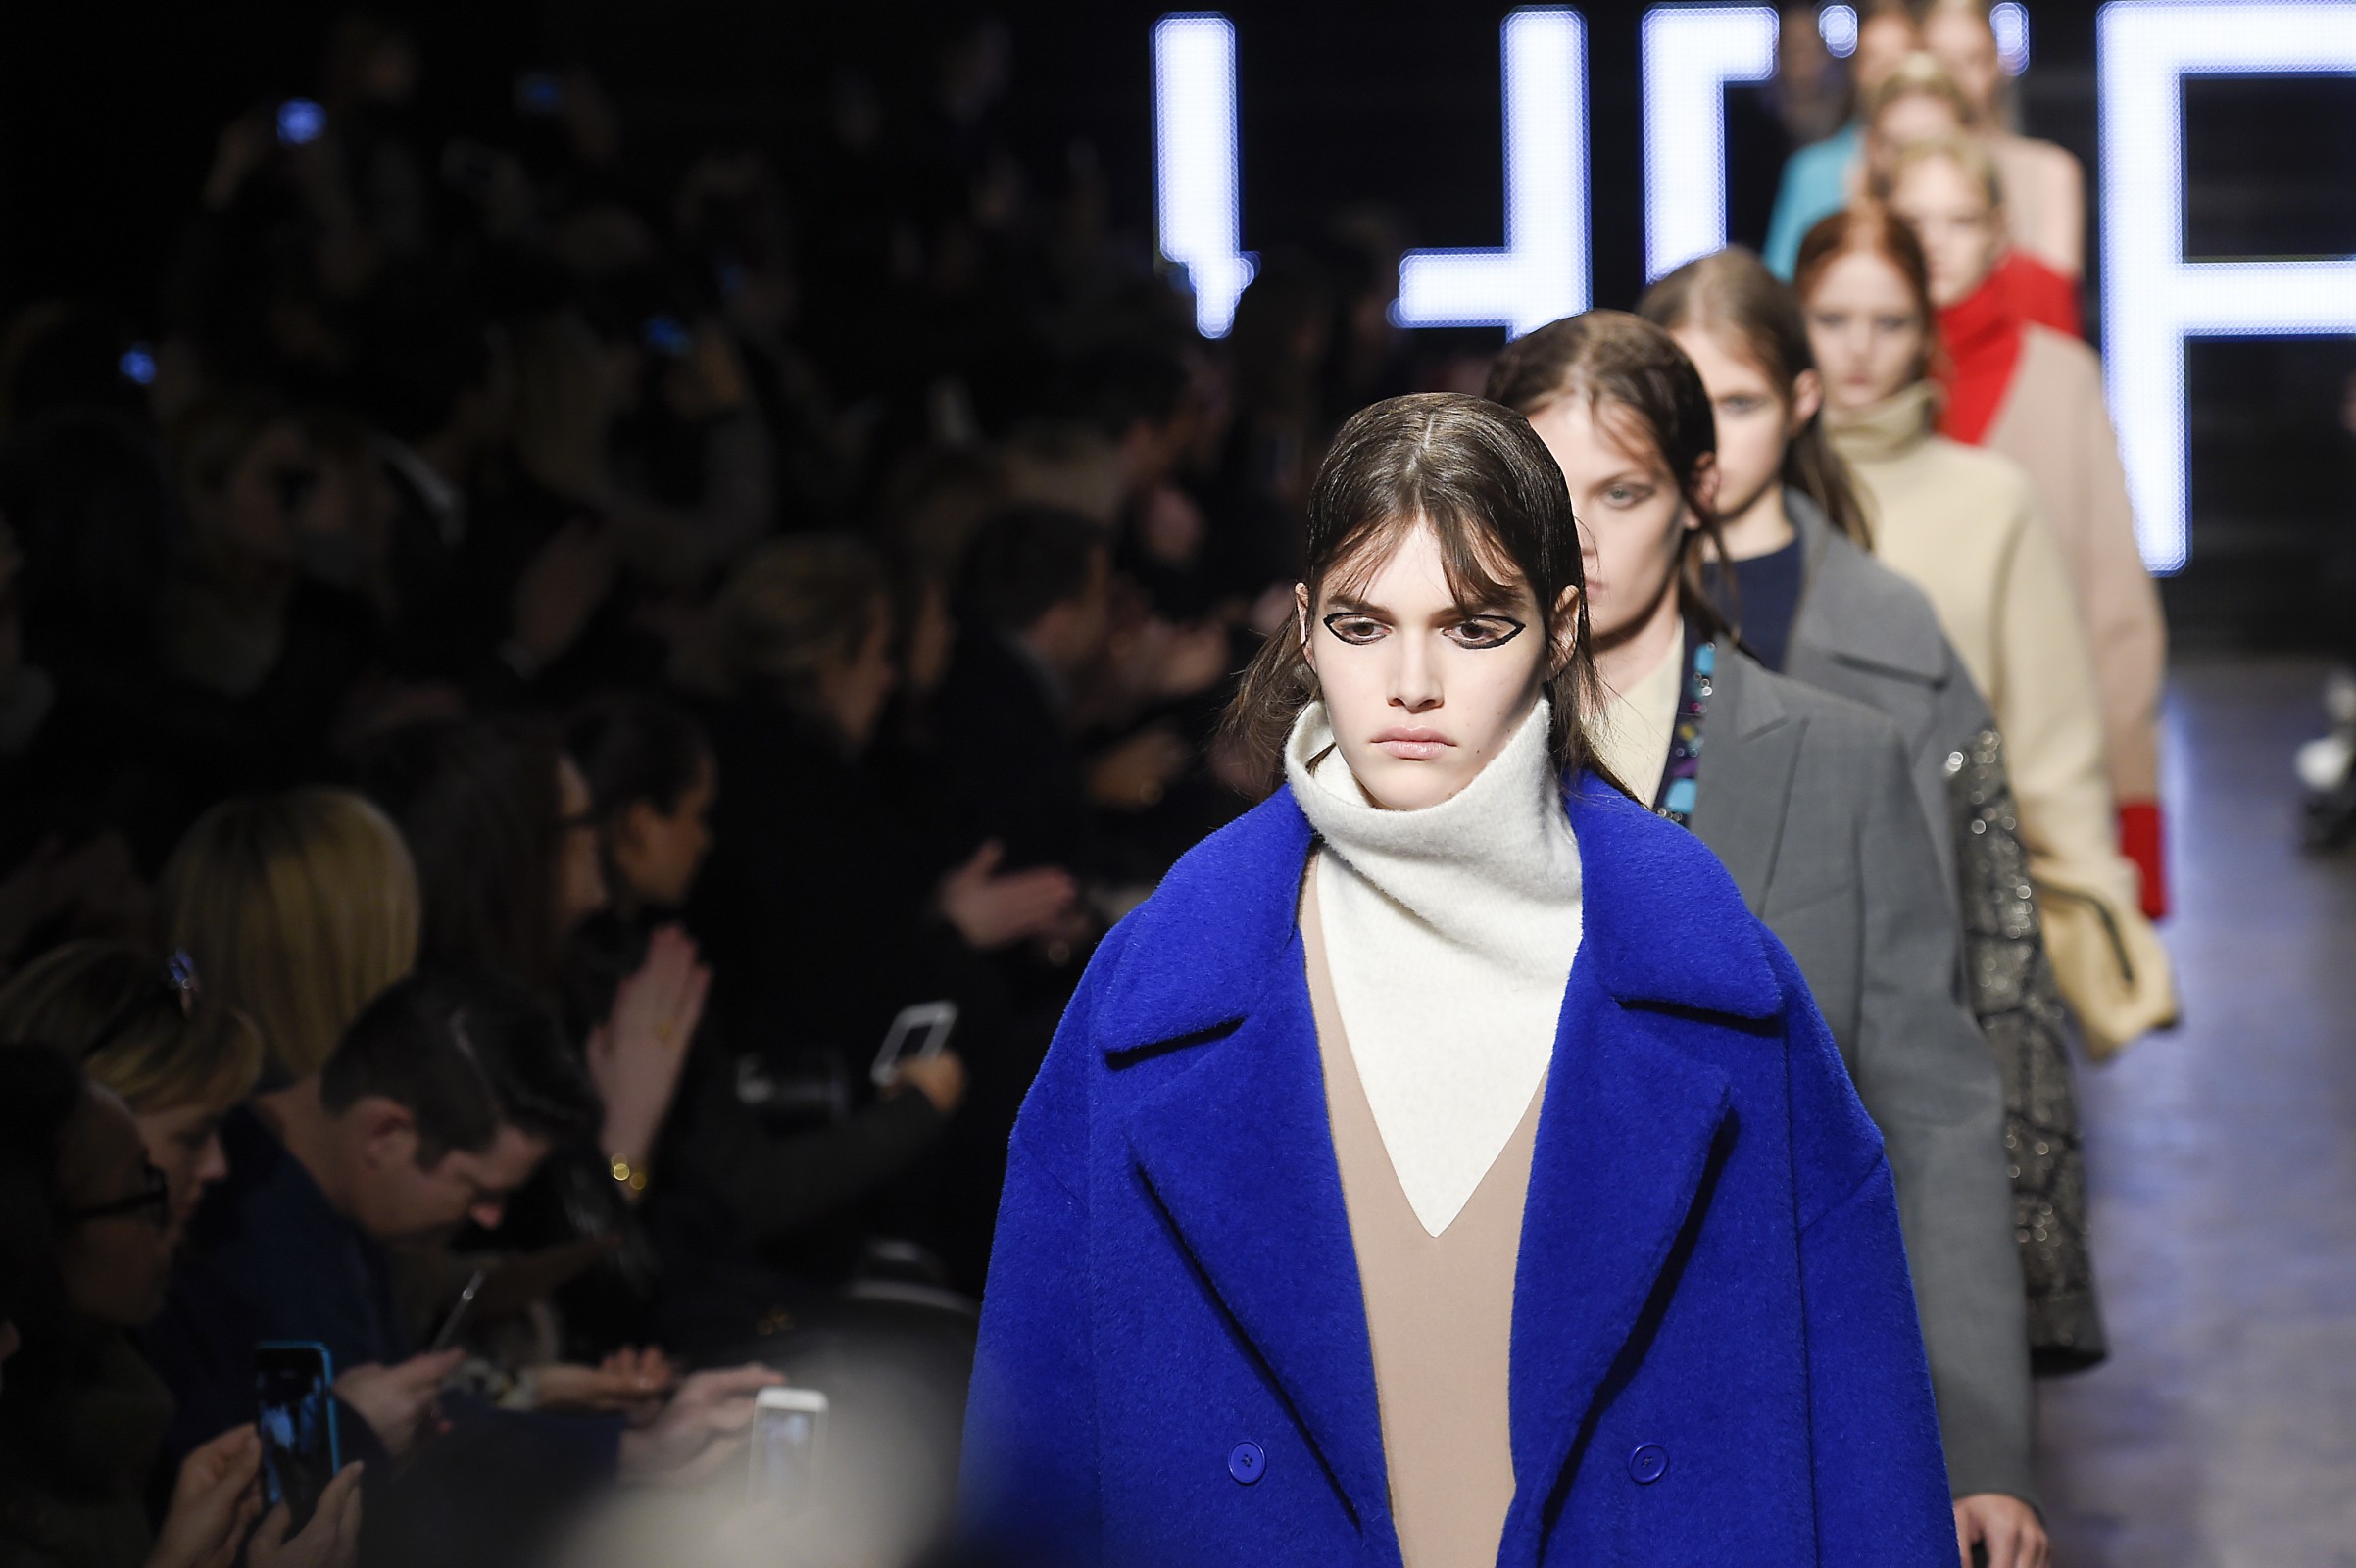 Fashion Week Round Up: Winter Warmers to Watch